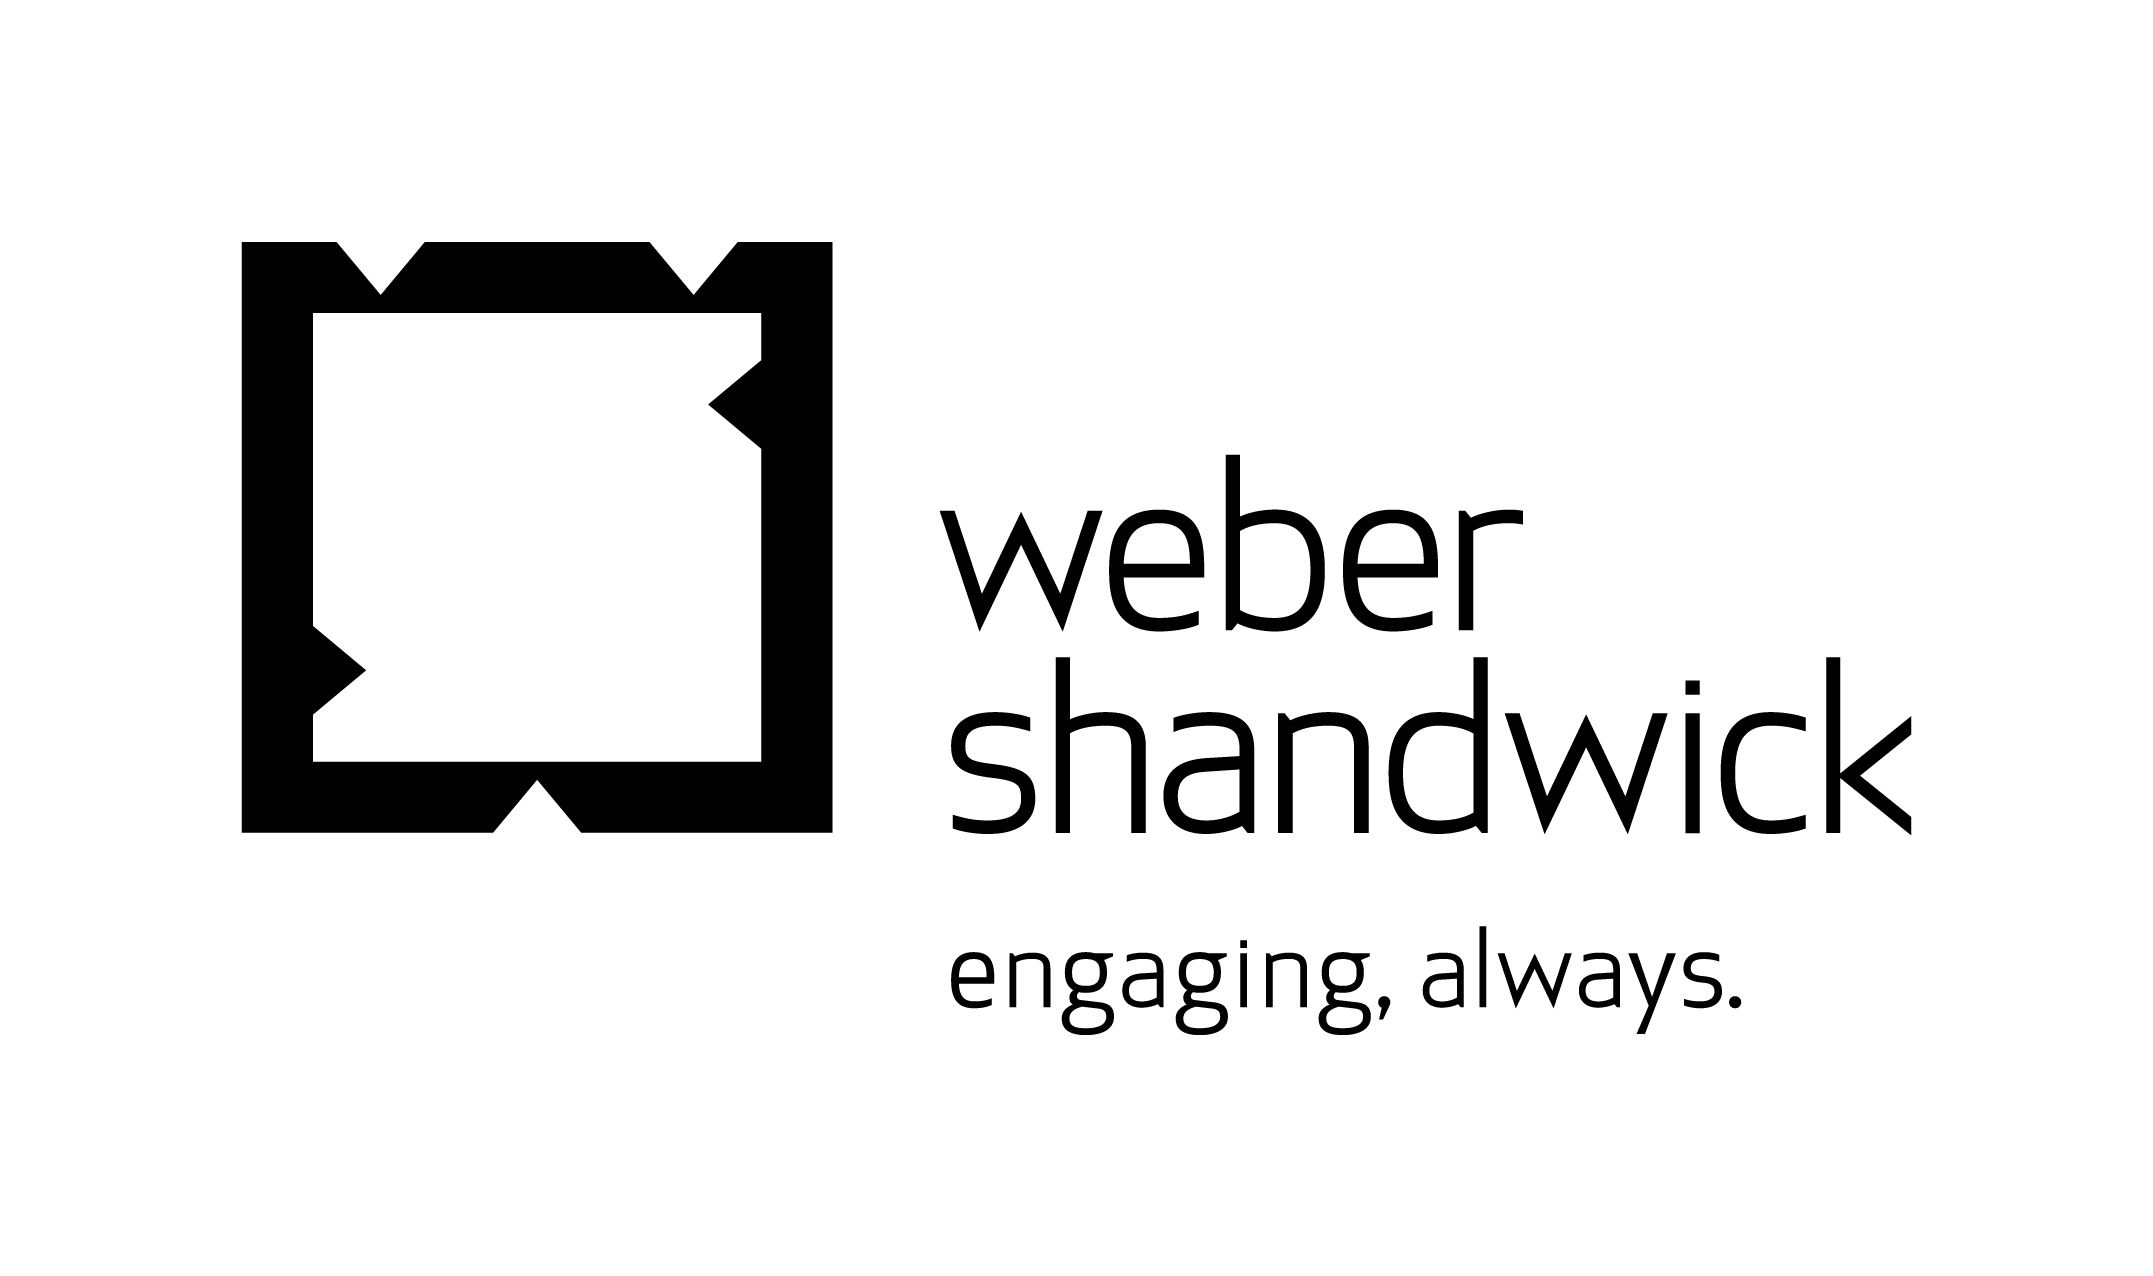  Leading Public Relations Company Logo: Weber Shandwick